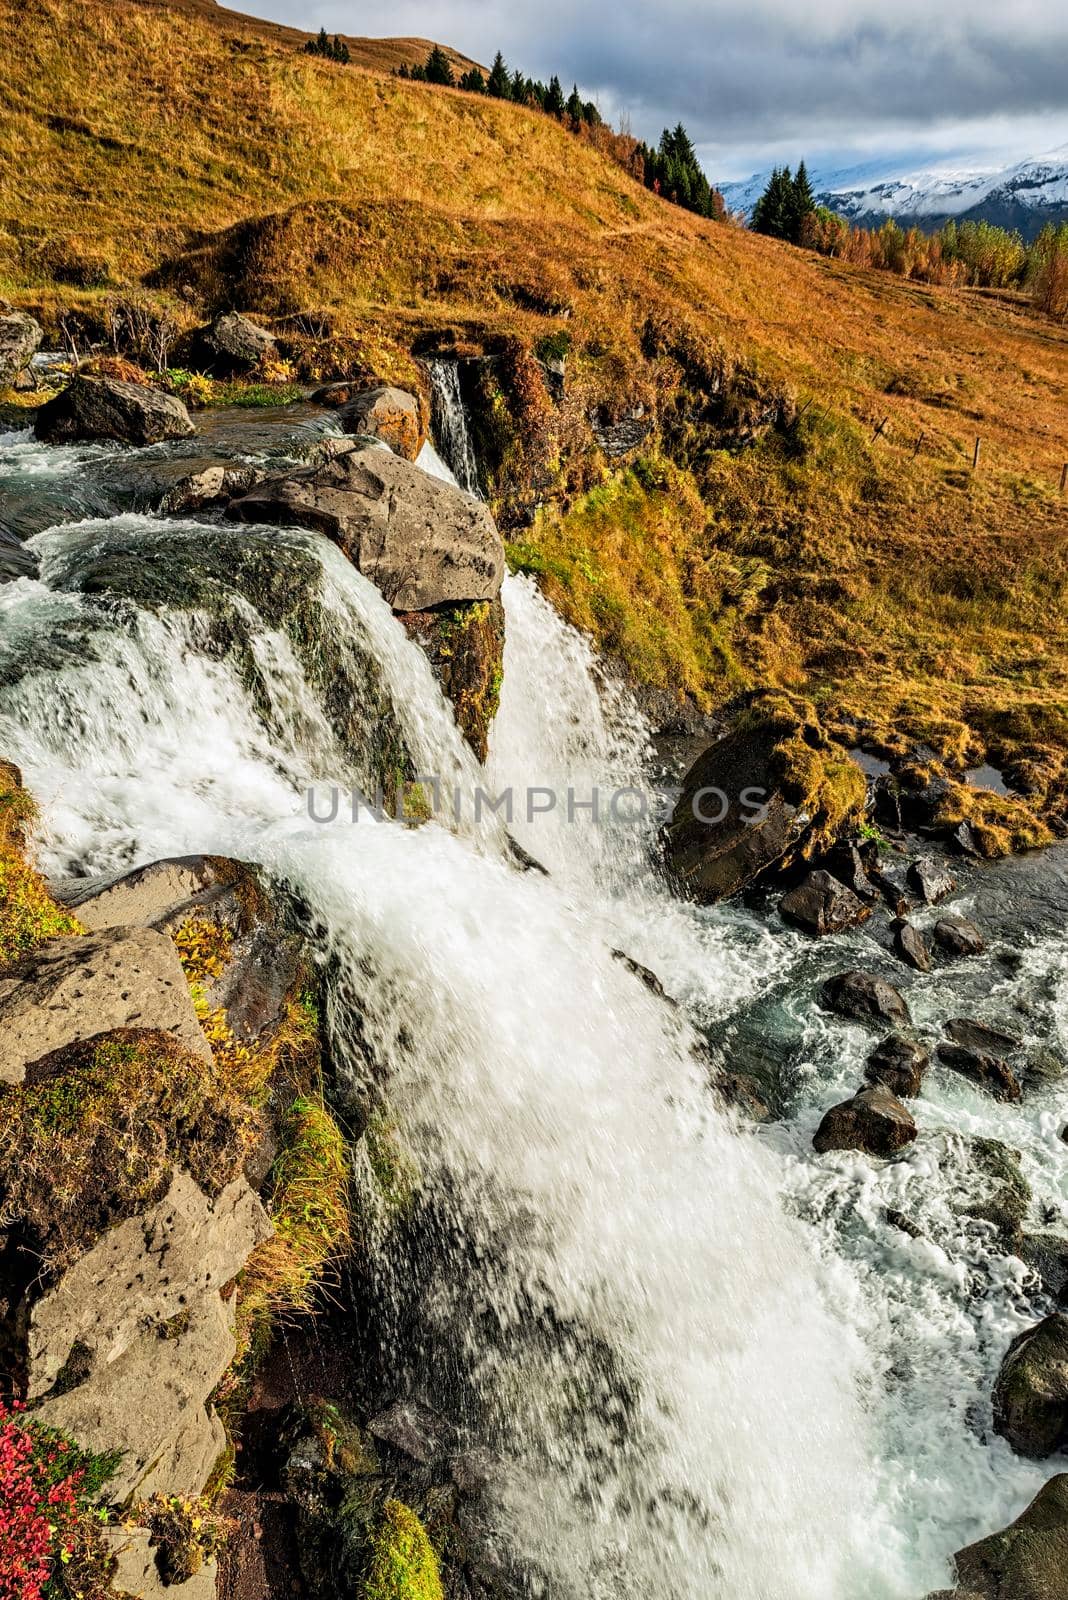 Gluggafoss waterfall in summer season also called Merkjarfoss near Thorsmork, Iceland